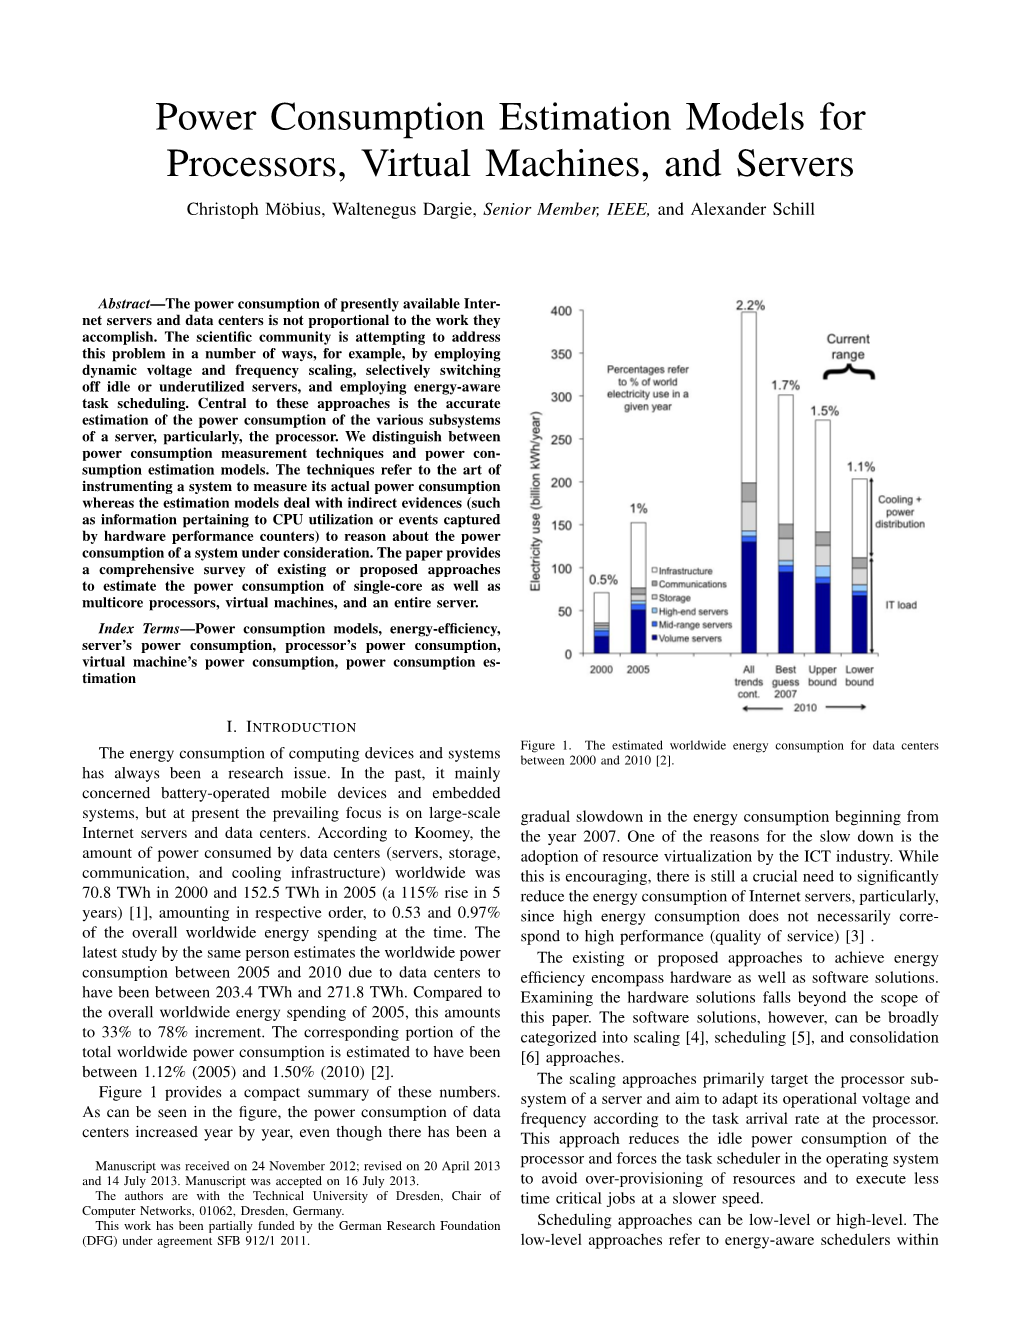 Power Consumption Estimation Models for Processors, Virtual Machines, and Servers Christoph Möbius, Waltenegus Dargie, Senior Member, IEEE, and Alexander Schill